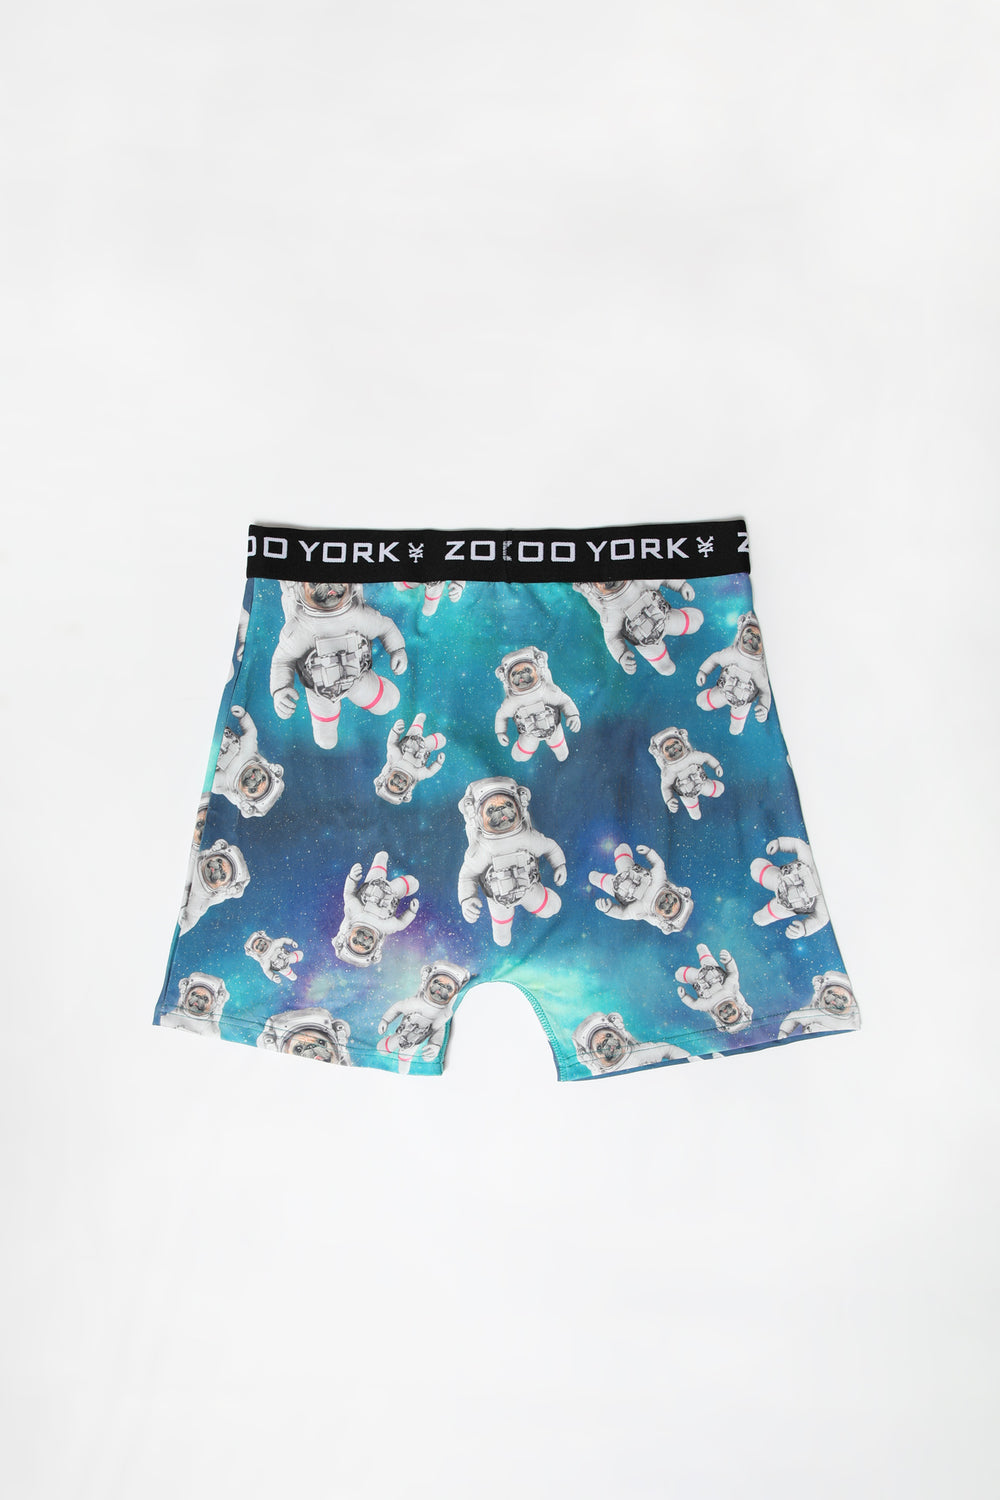 Boxer Imprimé Pugs Astronautes Zoo York Junior Boxer Imprimé Pugs Astronautes Zoo York Junior